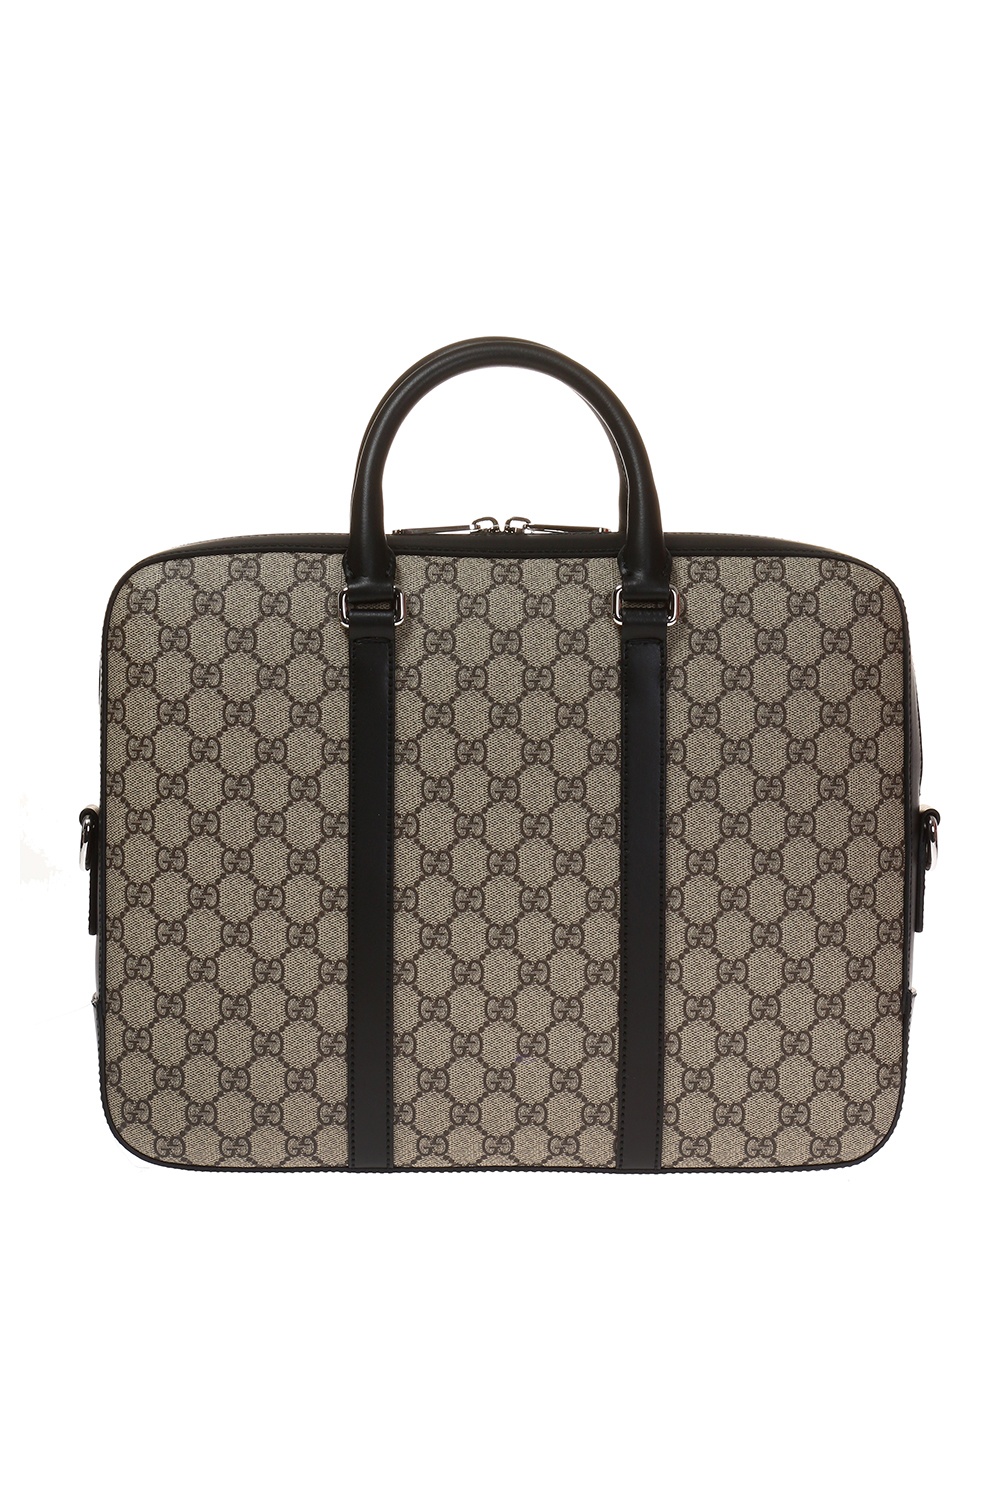 Brown 'GG Supreme' canvas laptop case Gucci - Vitkac Italy